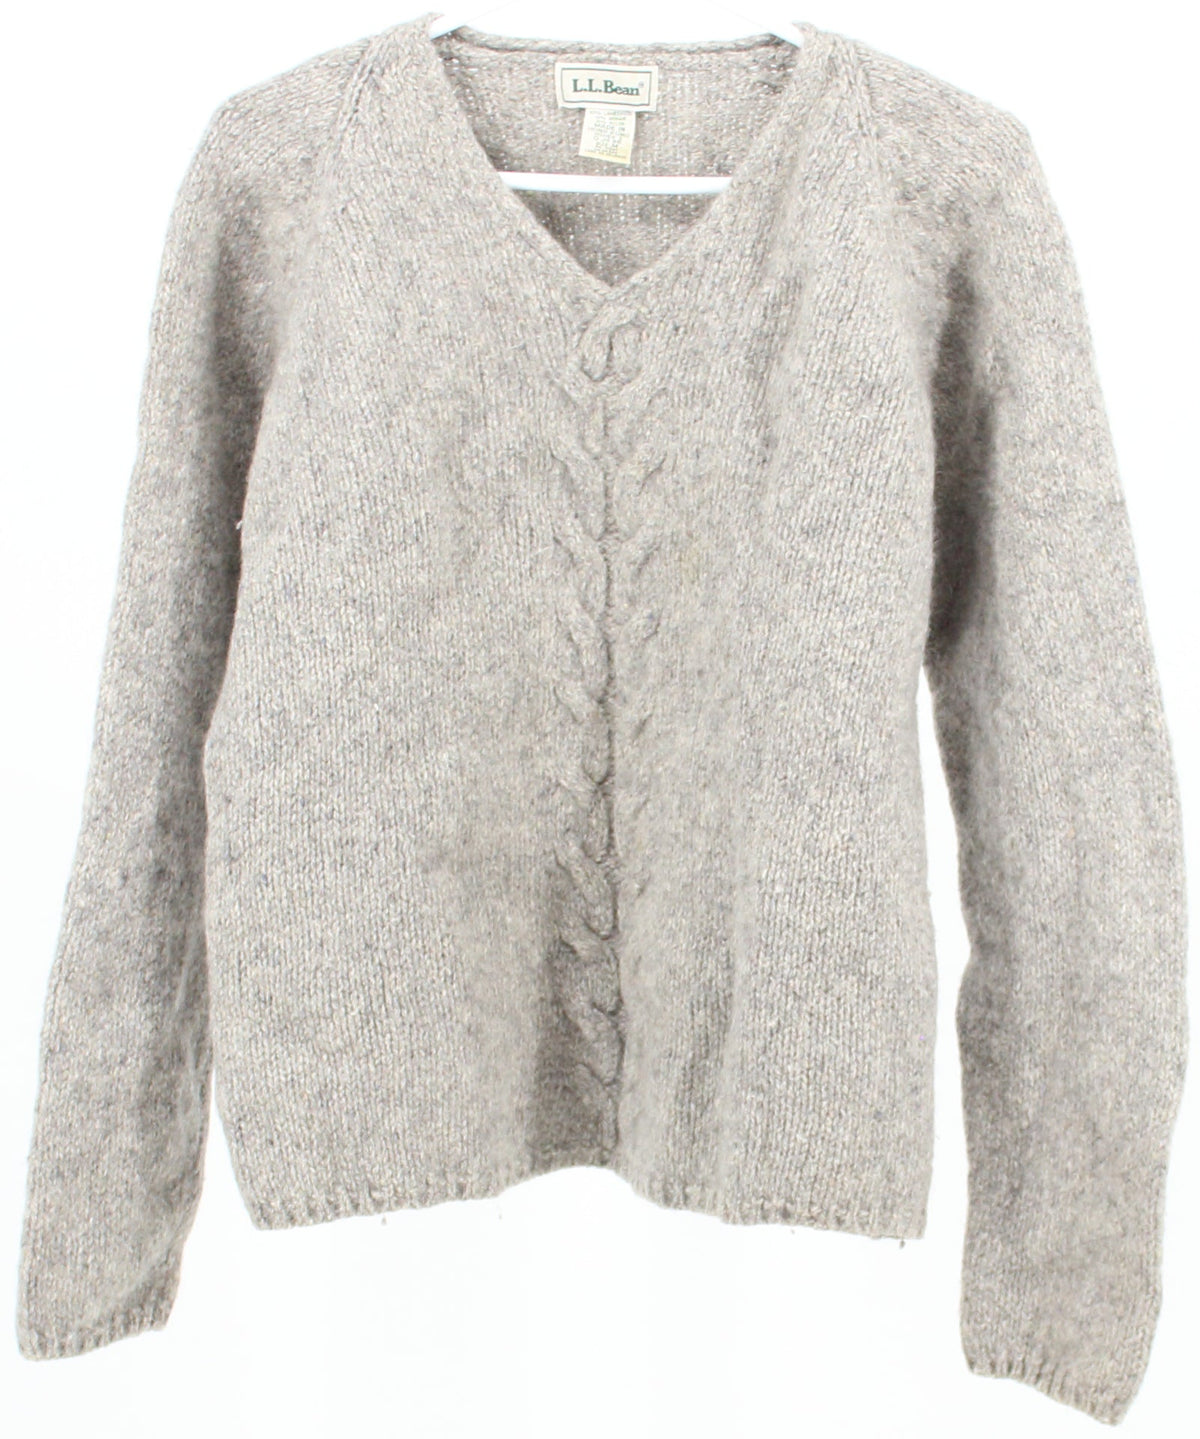 L.L.Bean Grey V Neck Jacquard Knit Sweater